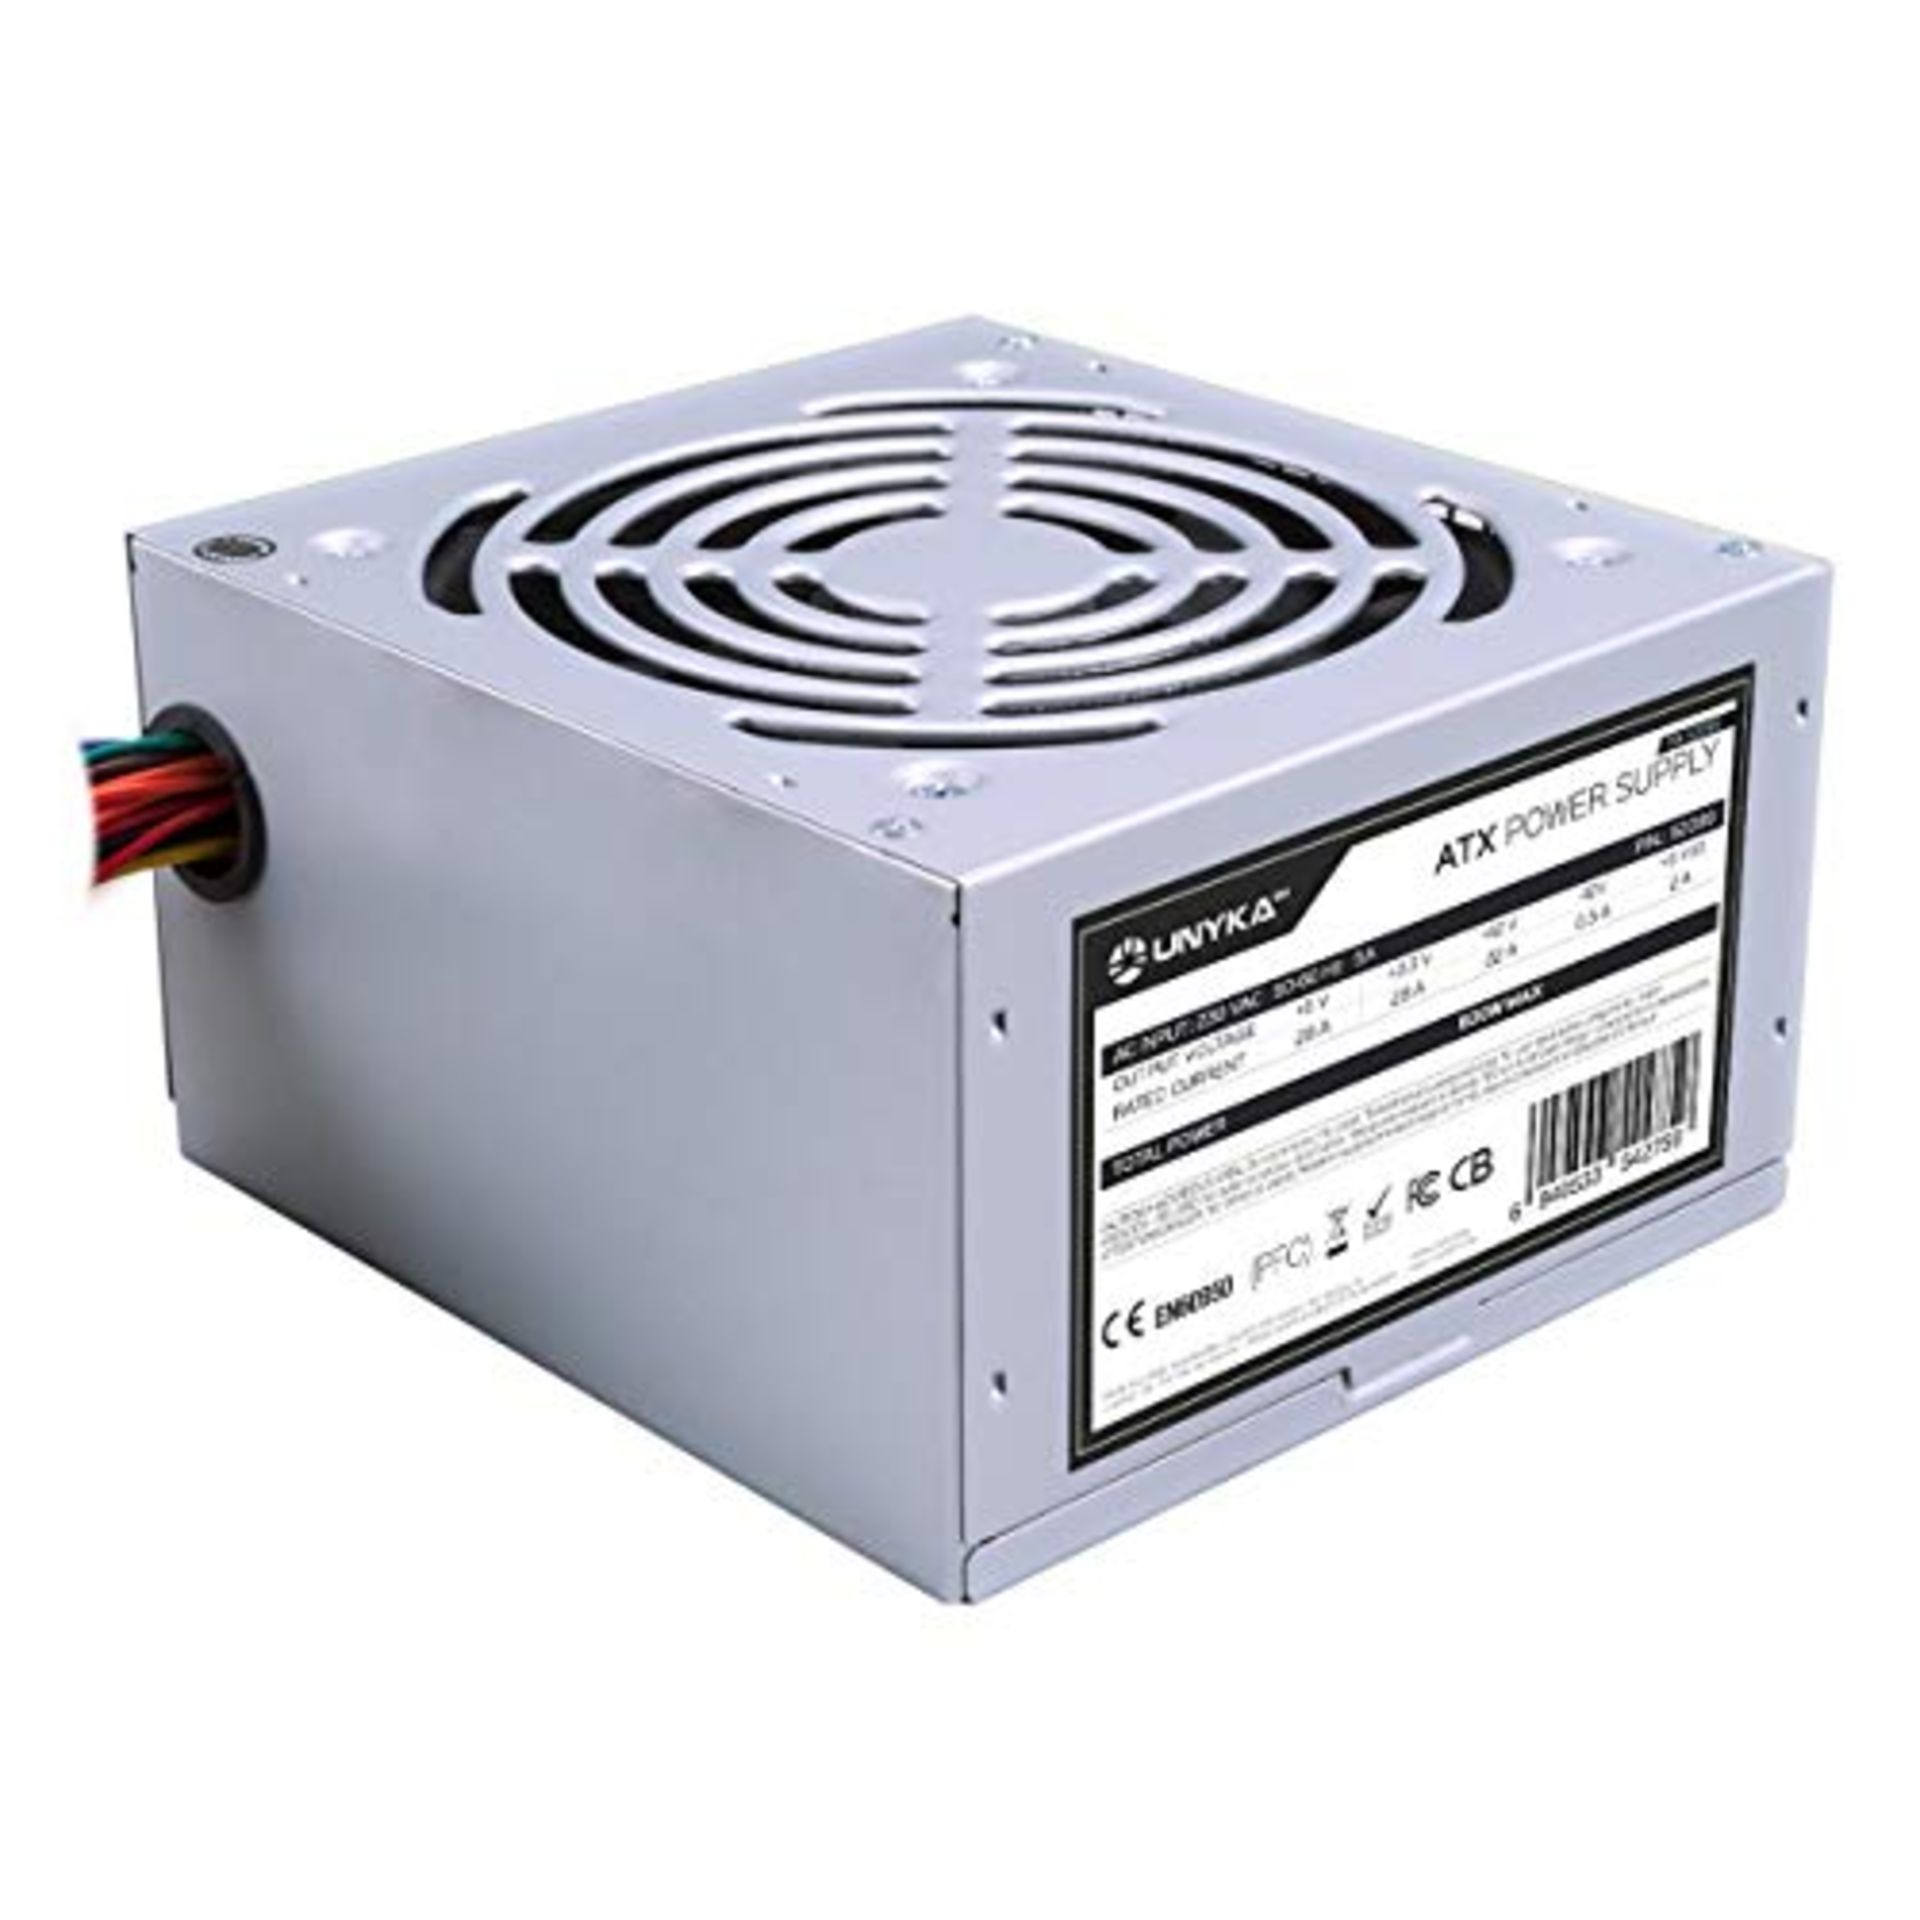 UNYKAch ATX 500W power supply silver - power supply (500 W, 230 V, 50-60 Hz, 28 A, 22